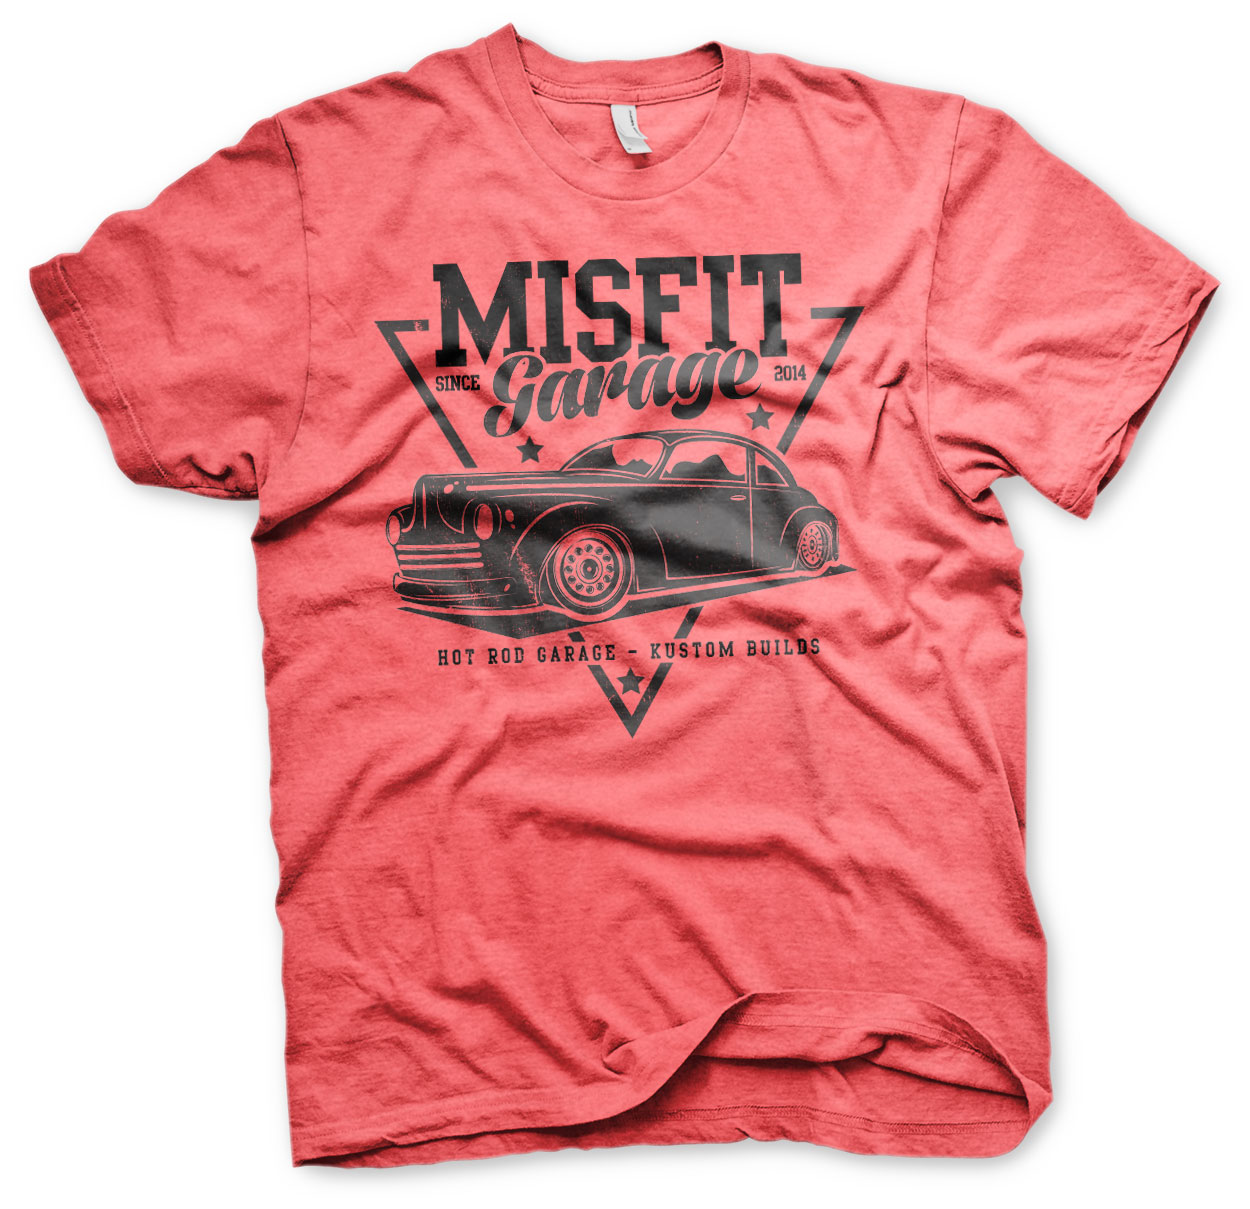 Misfit Garage Since 2014 T Shirt Shirtstore